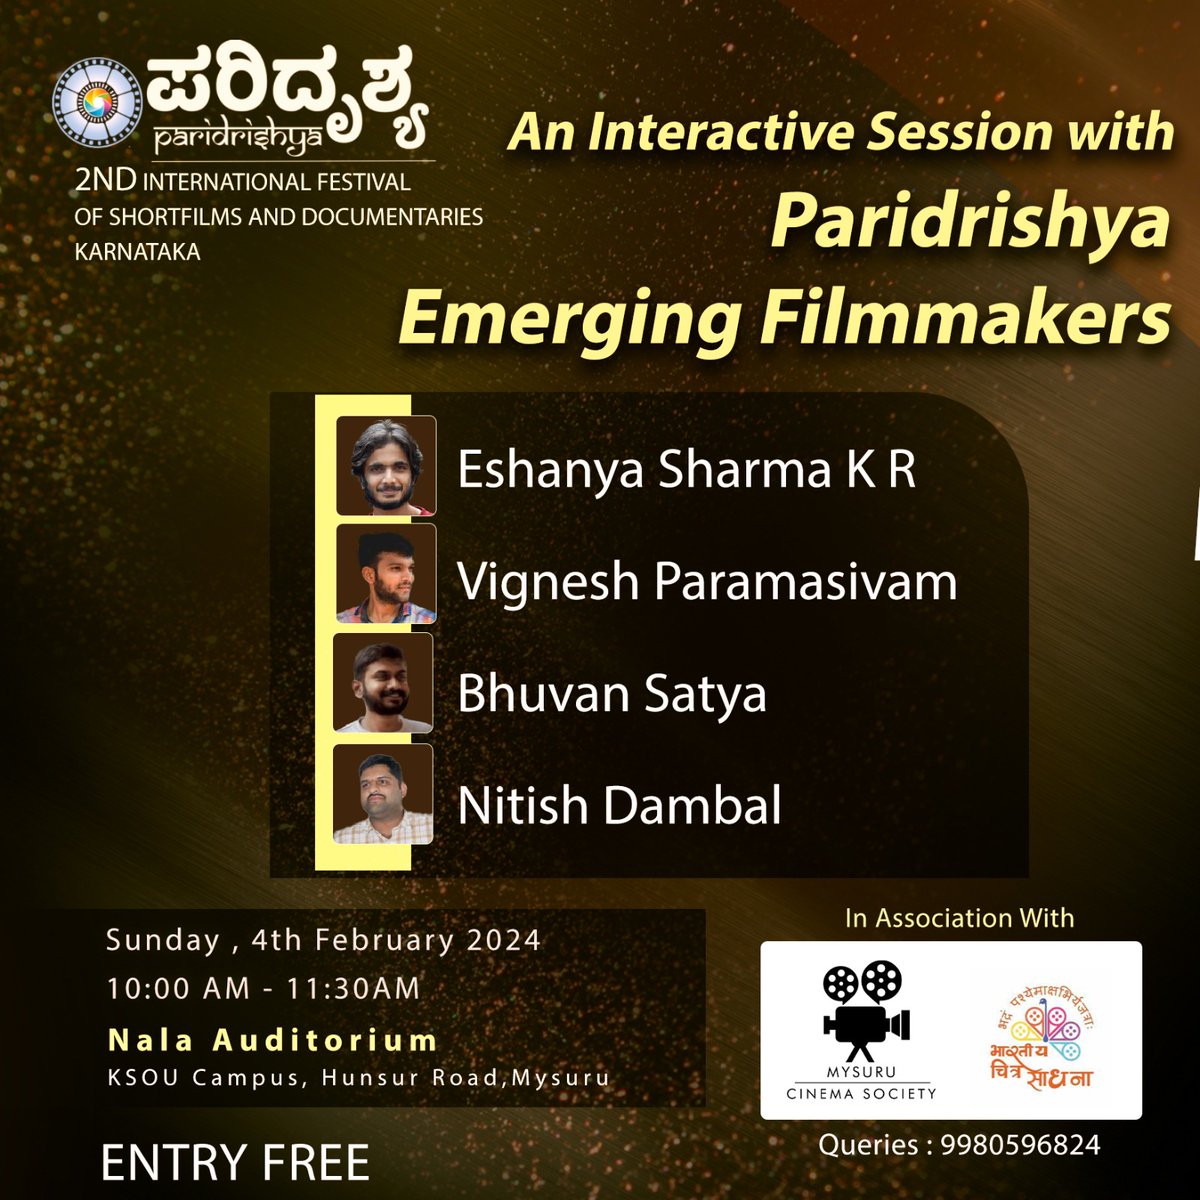 Tomorrow's  (4th Feb 24) attractions  @ParidrishyaFest 
A conversation with veteran film maker #GirishKasaravalli
@CinemaRareIN @IFFIGoa
@FTIIOfficial @Festival_Cannes @Star_Of_Mysore 
@TheHinduCinema @UdayavaniNews 
@Vijayavani_Digi 
@Vijaykarnataka 
@HosadiganthaWeb